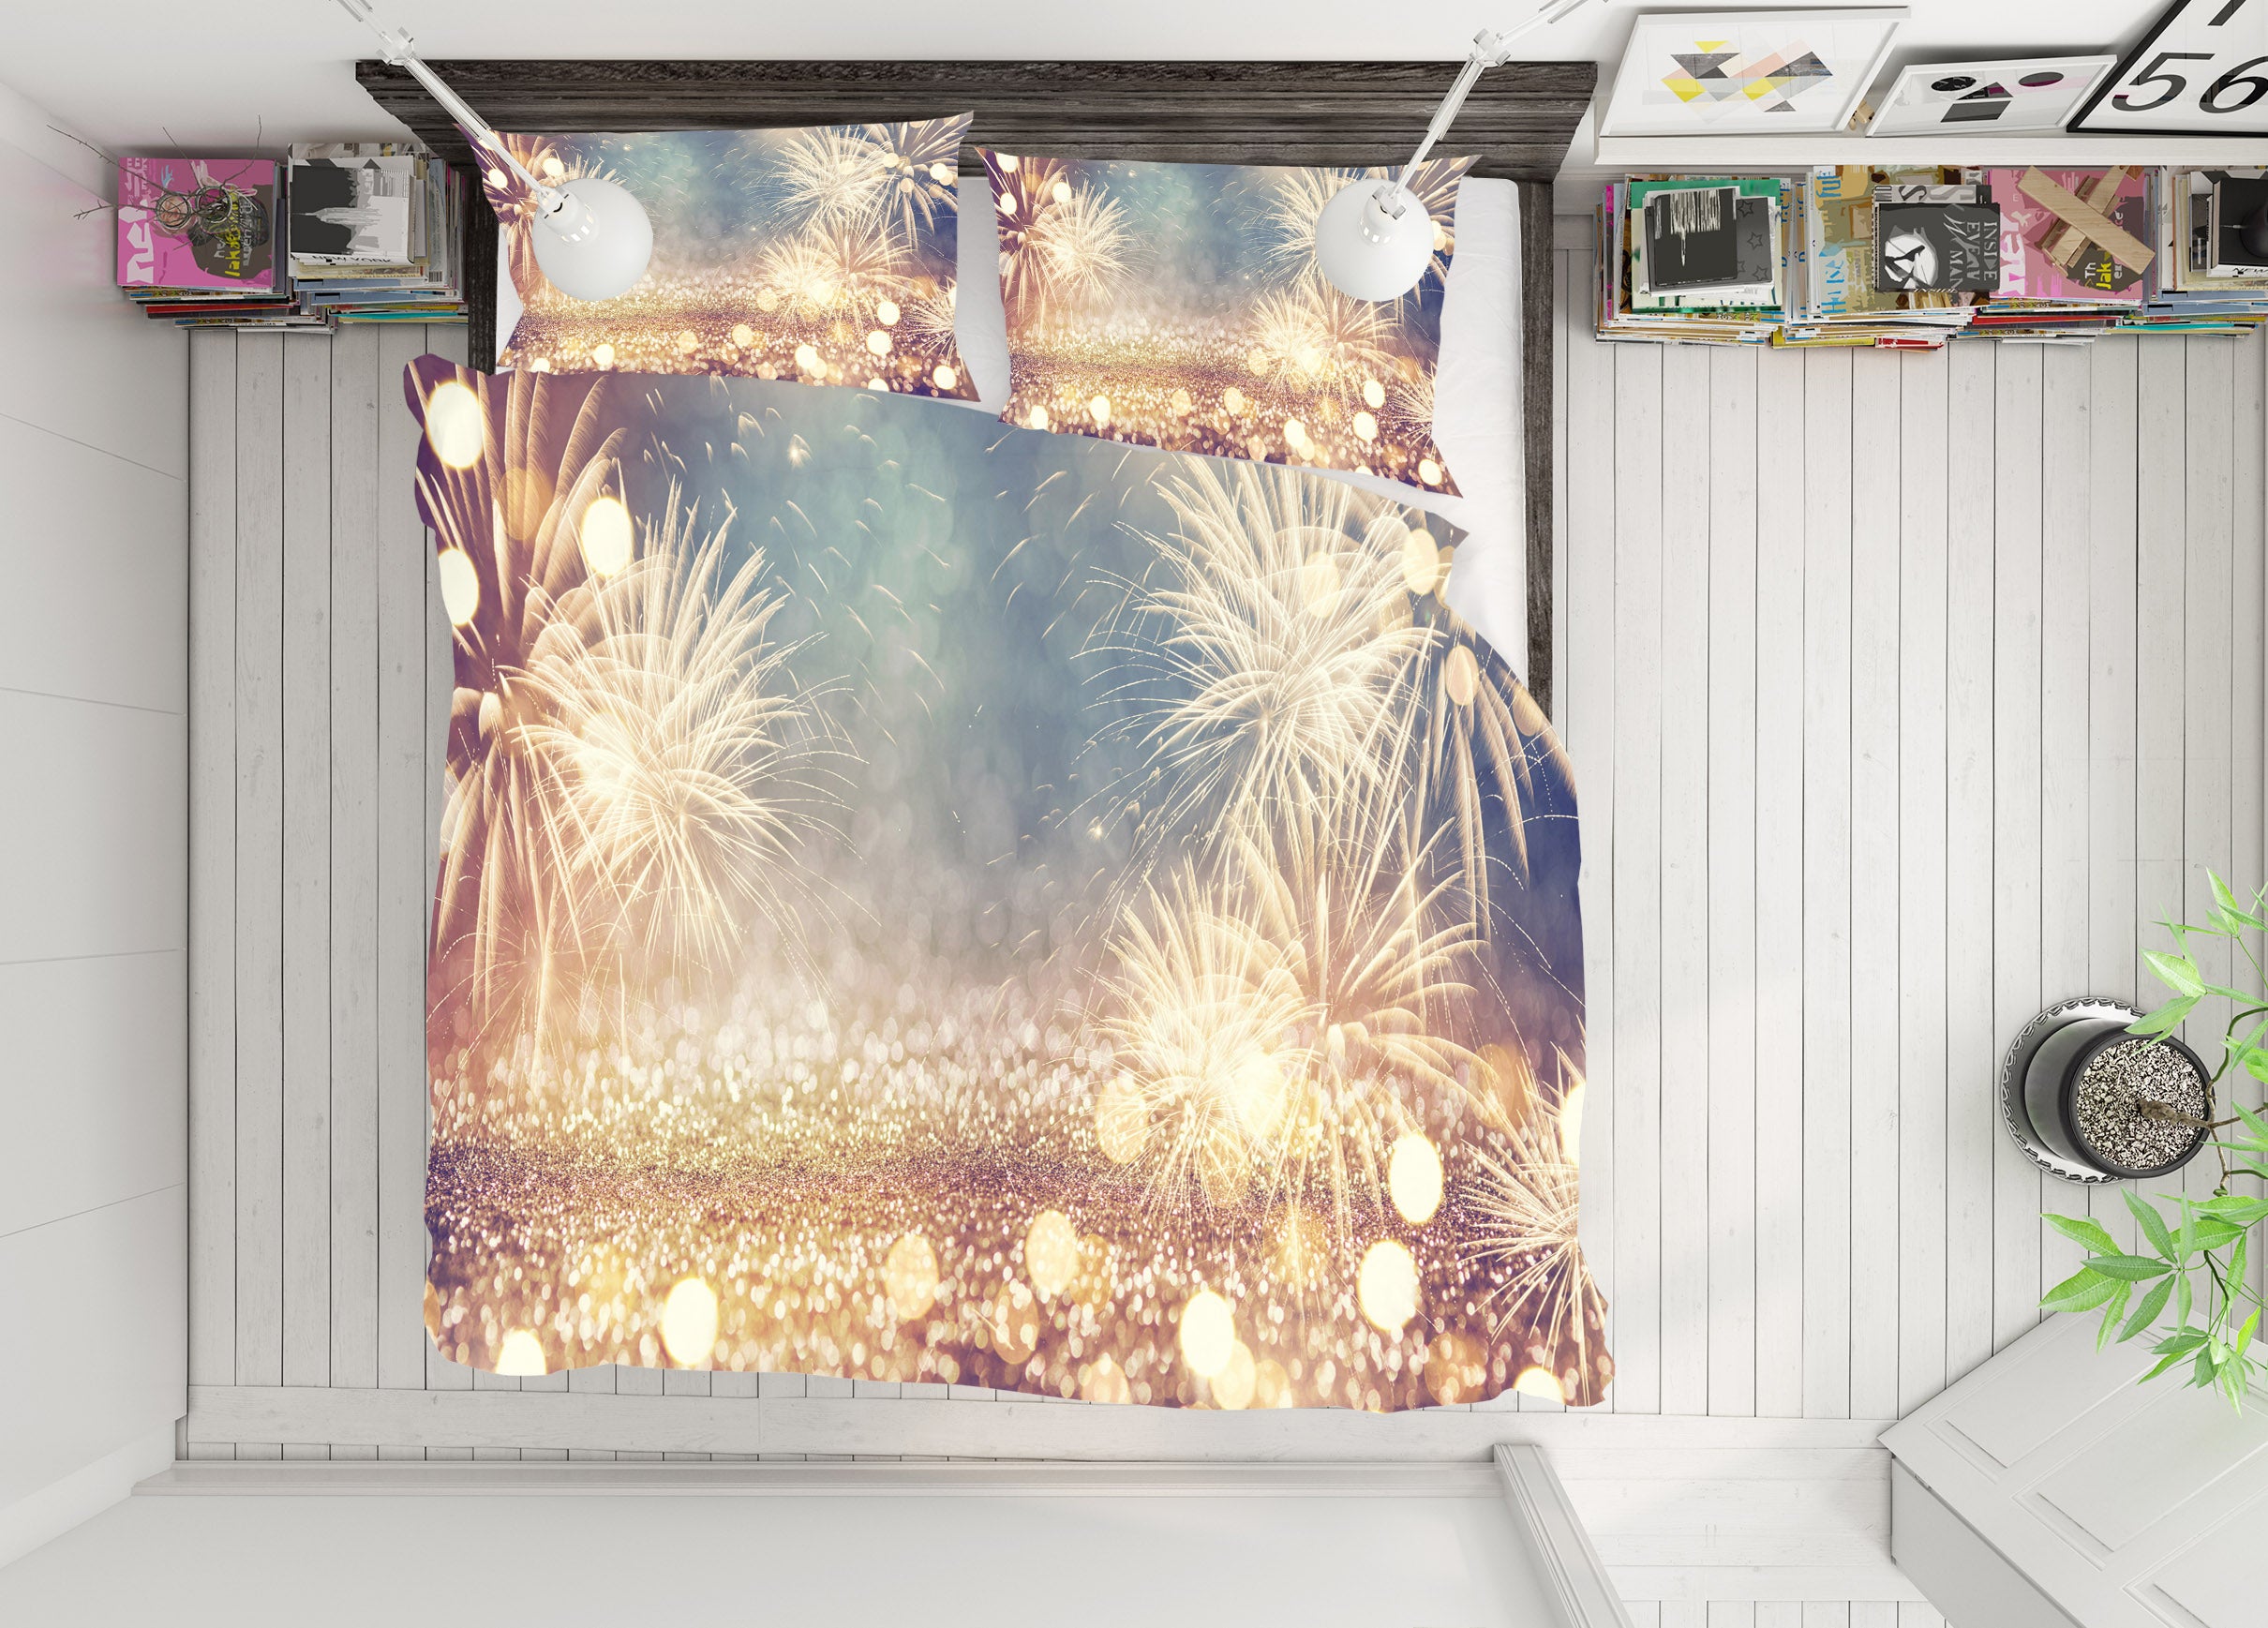 3D Fireworks 53001 Christmas Quilt Duvet Cover Xmas Bed Pillowcases